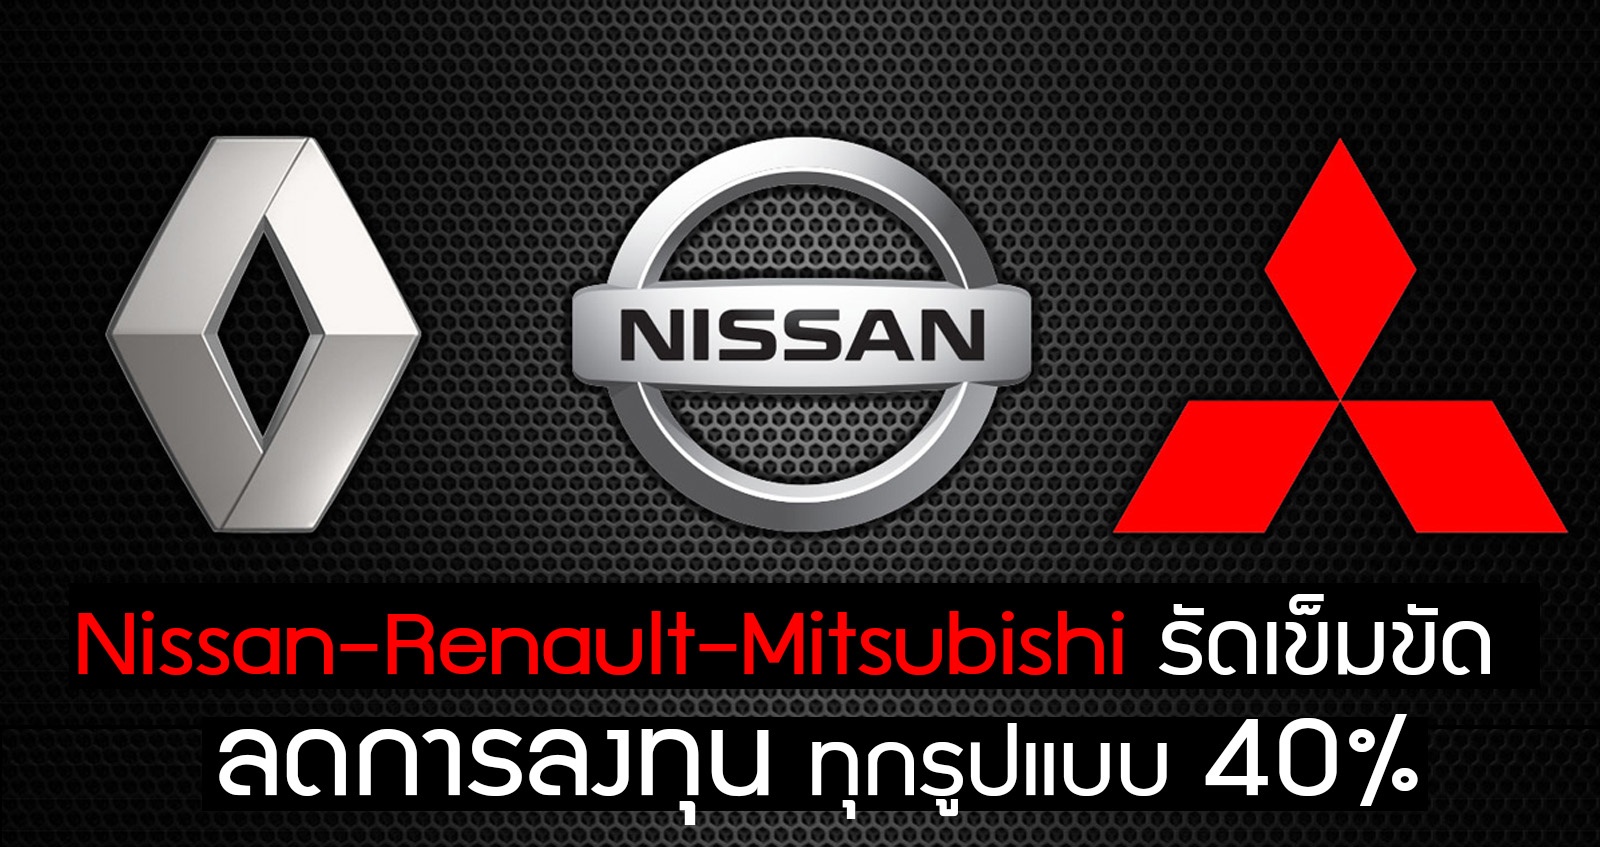 Nissan-Renault-Mitsubishi จับมือแน่น รัดเข็มขัด ลดการลงทุนทุกรูปบบ 40%